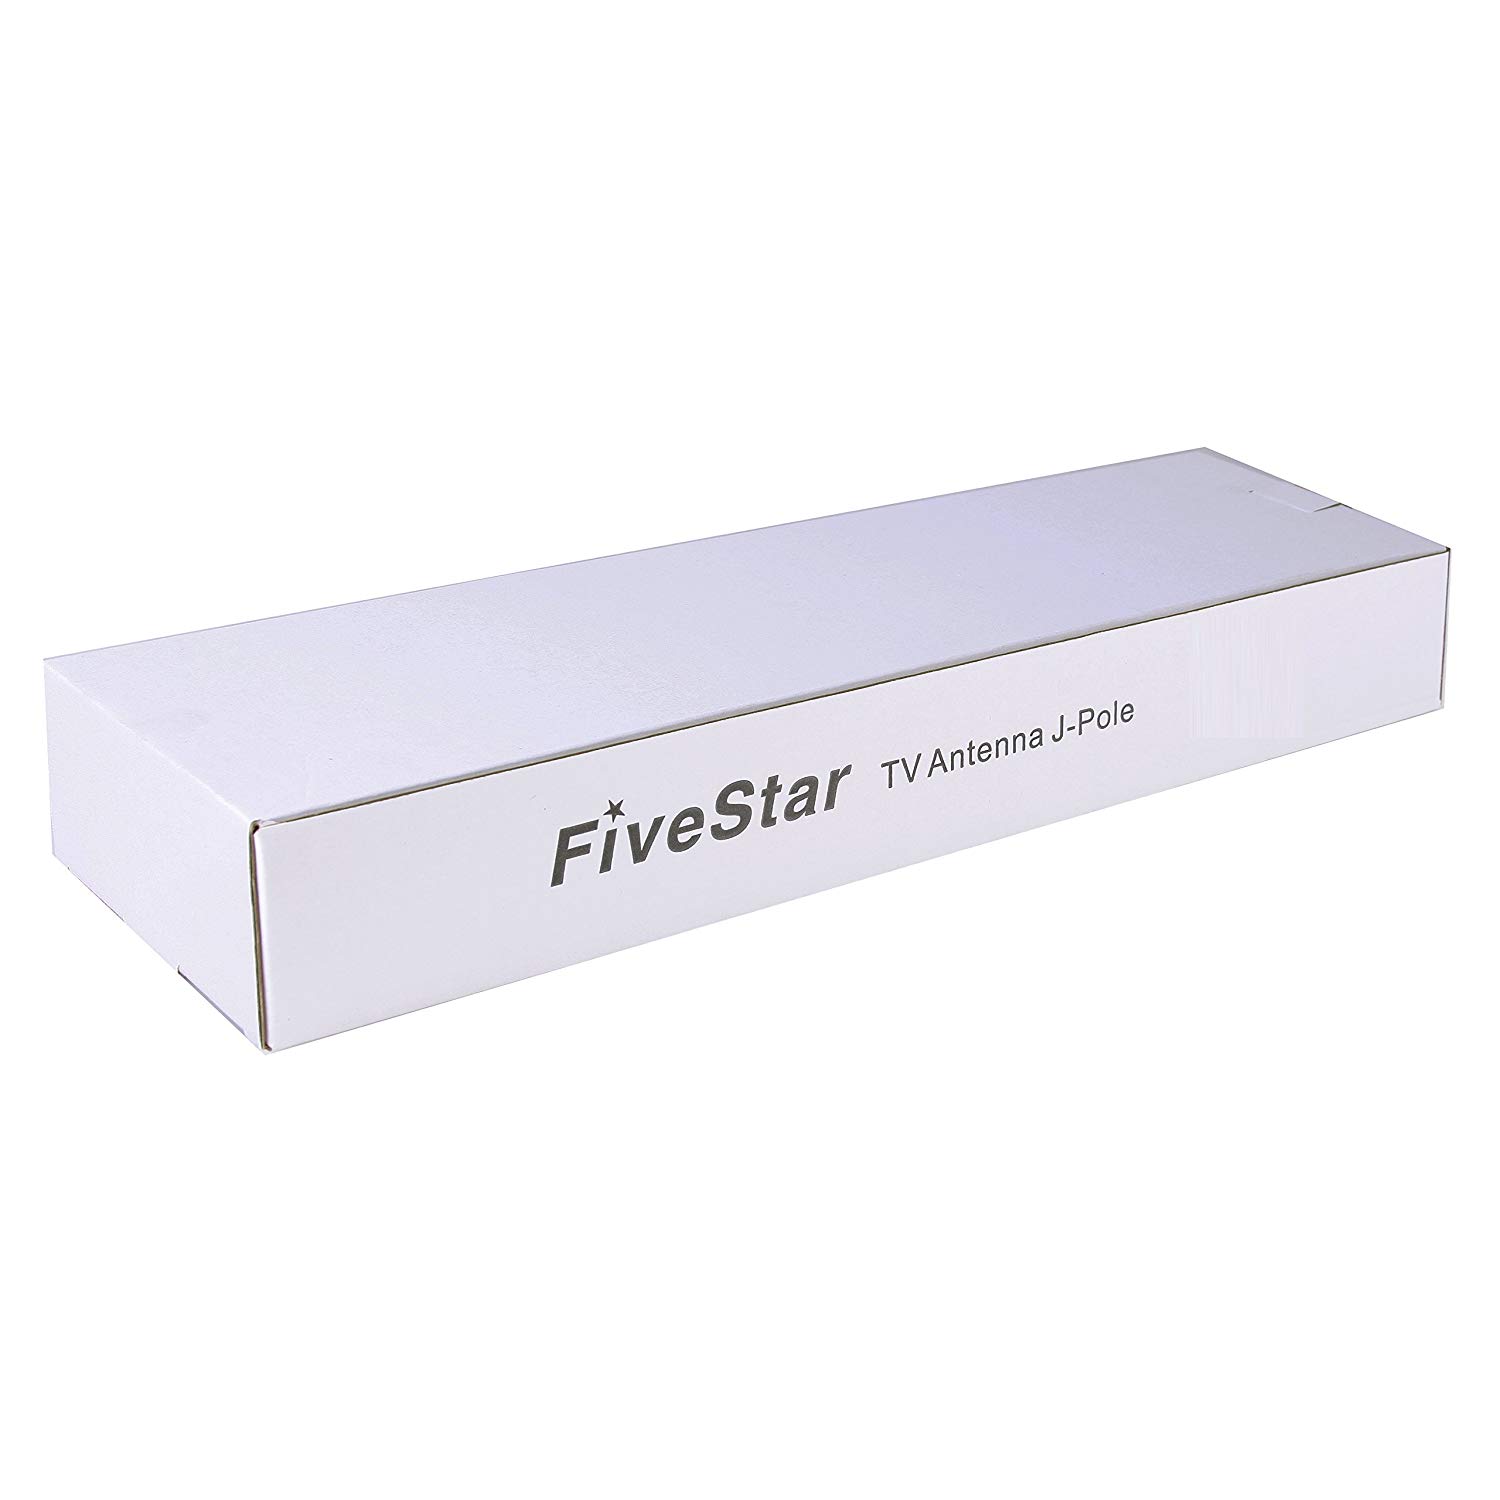 Elegant Package of FiveStar JPole